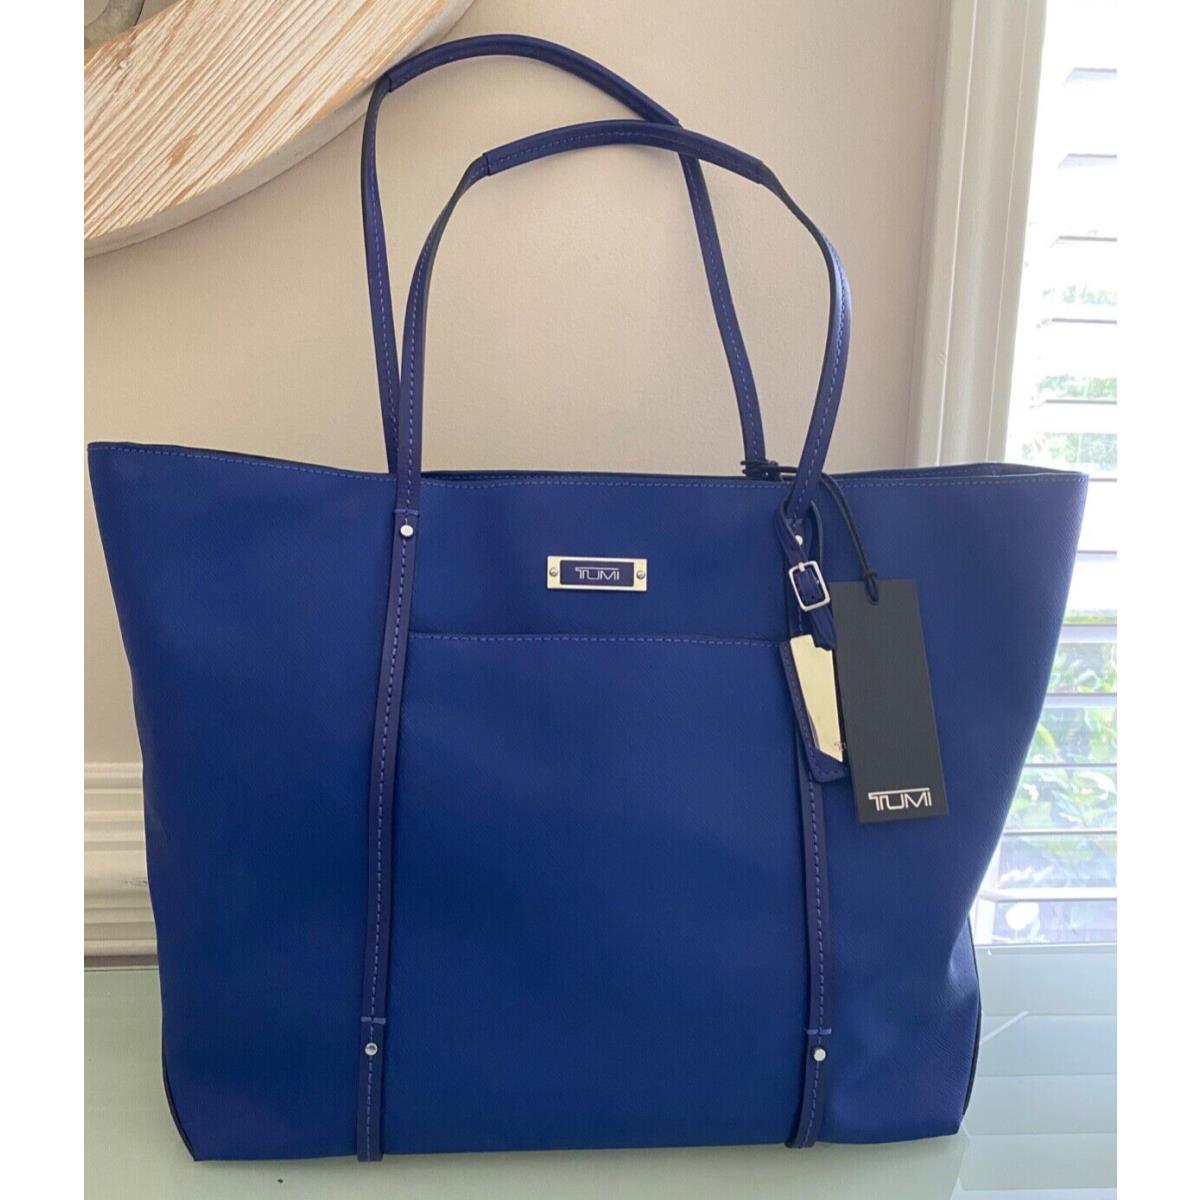 Tumi Q-tote Royal Blue Texture Pvc Handbag Purse Tote Bag